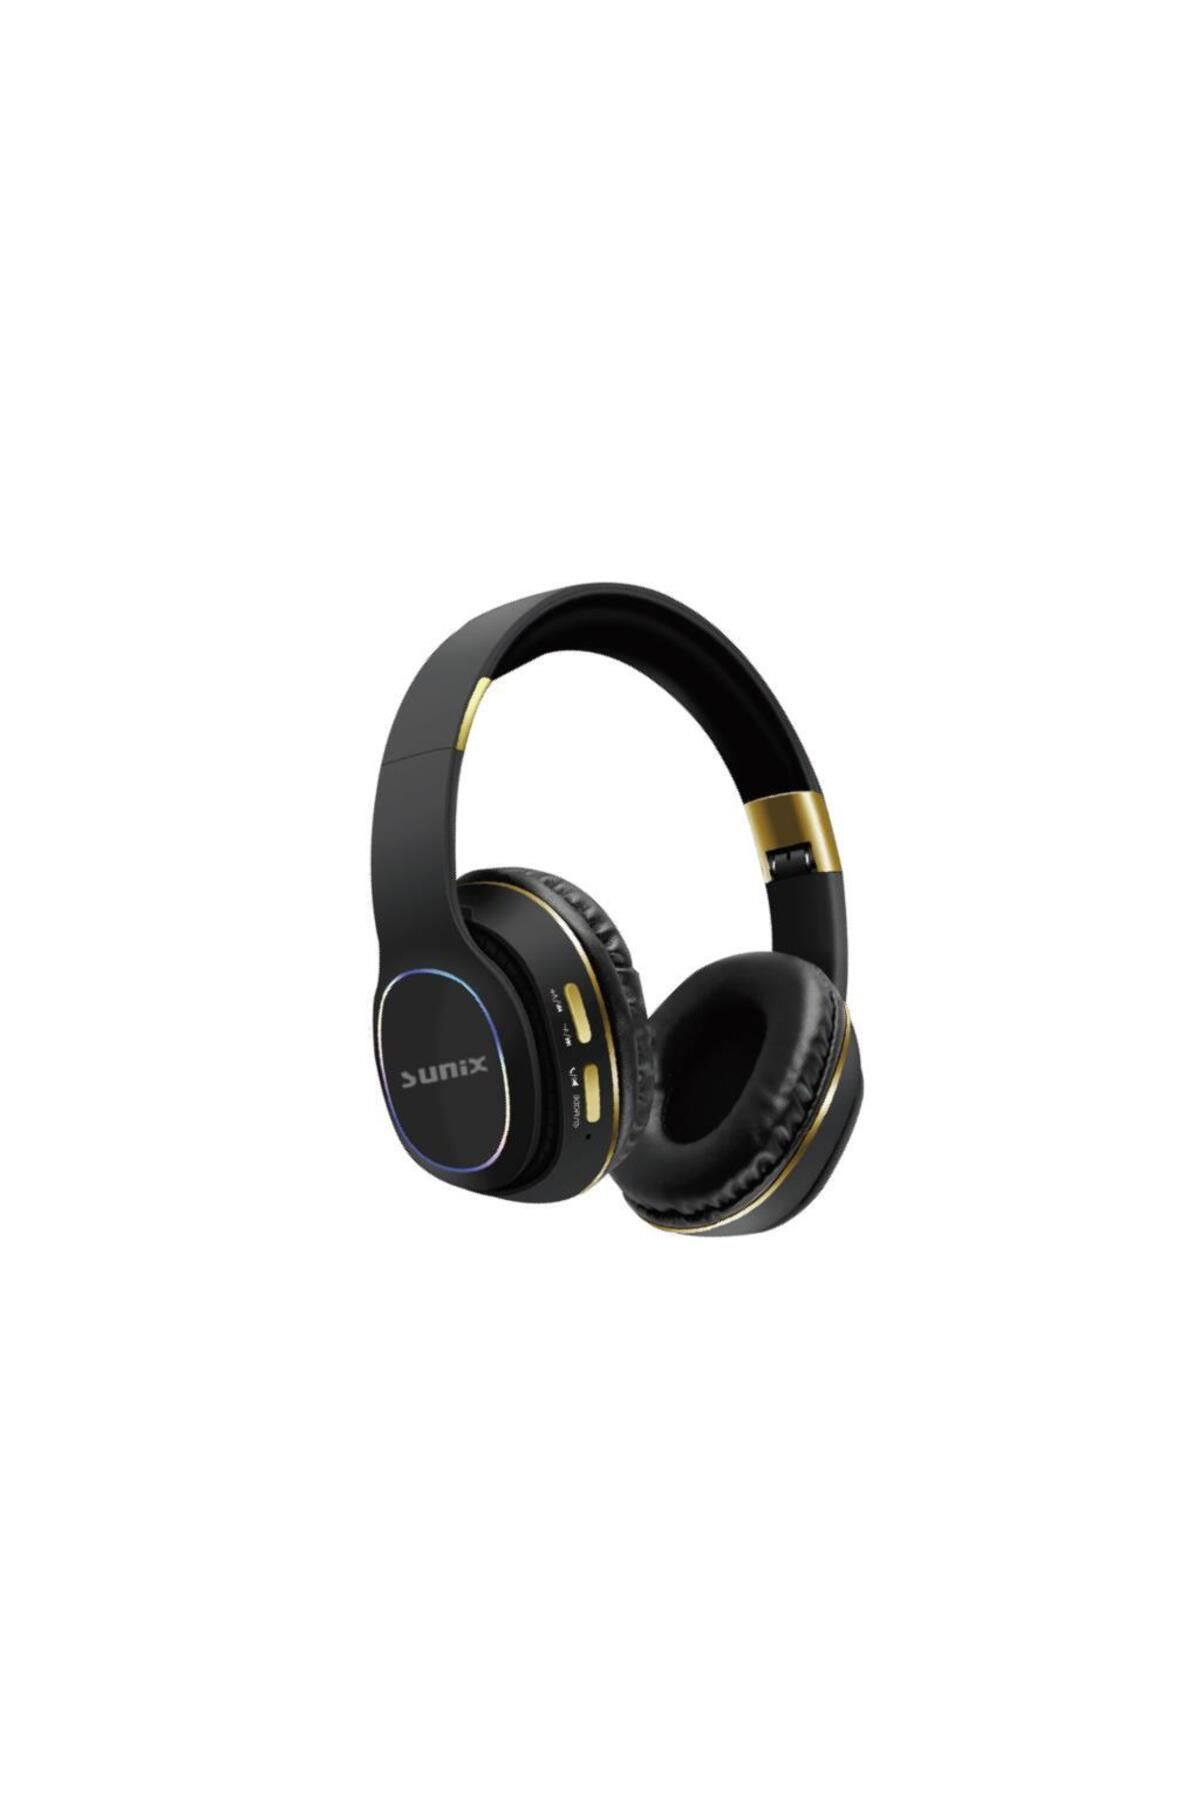 Sunix Wireless 5.0 Süper Bass Kulak Üstü Bluetooth Kulaklık Siyah Blt-26